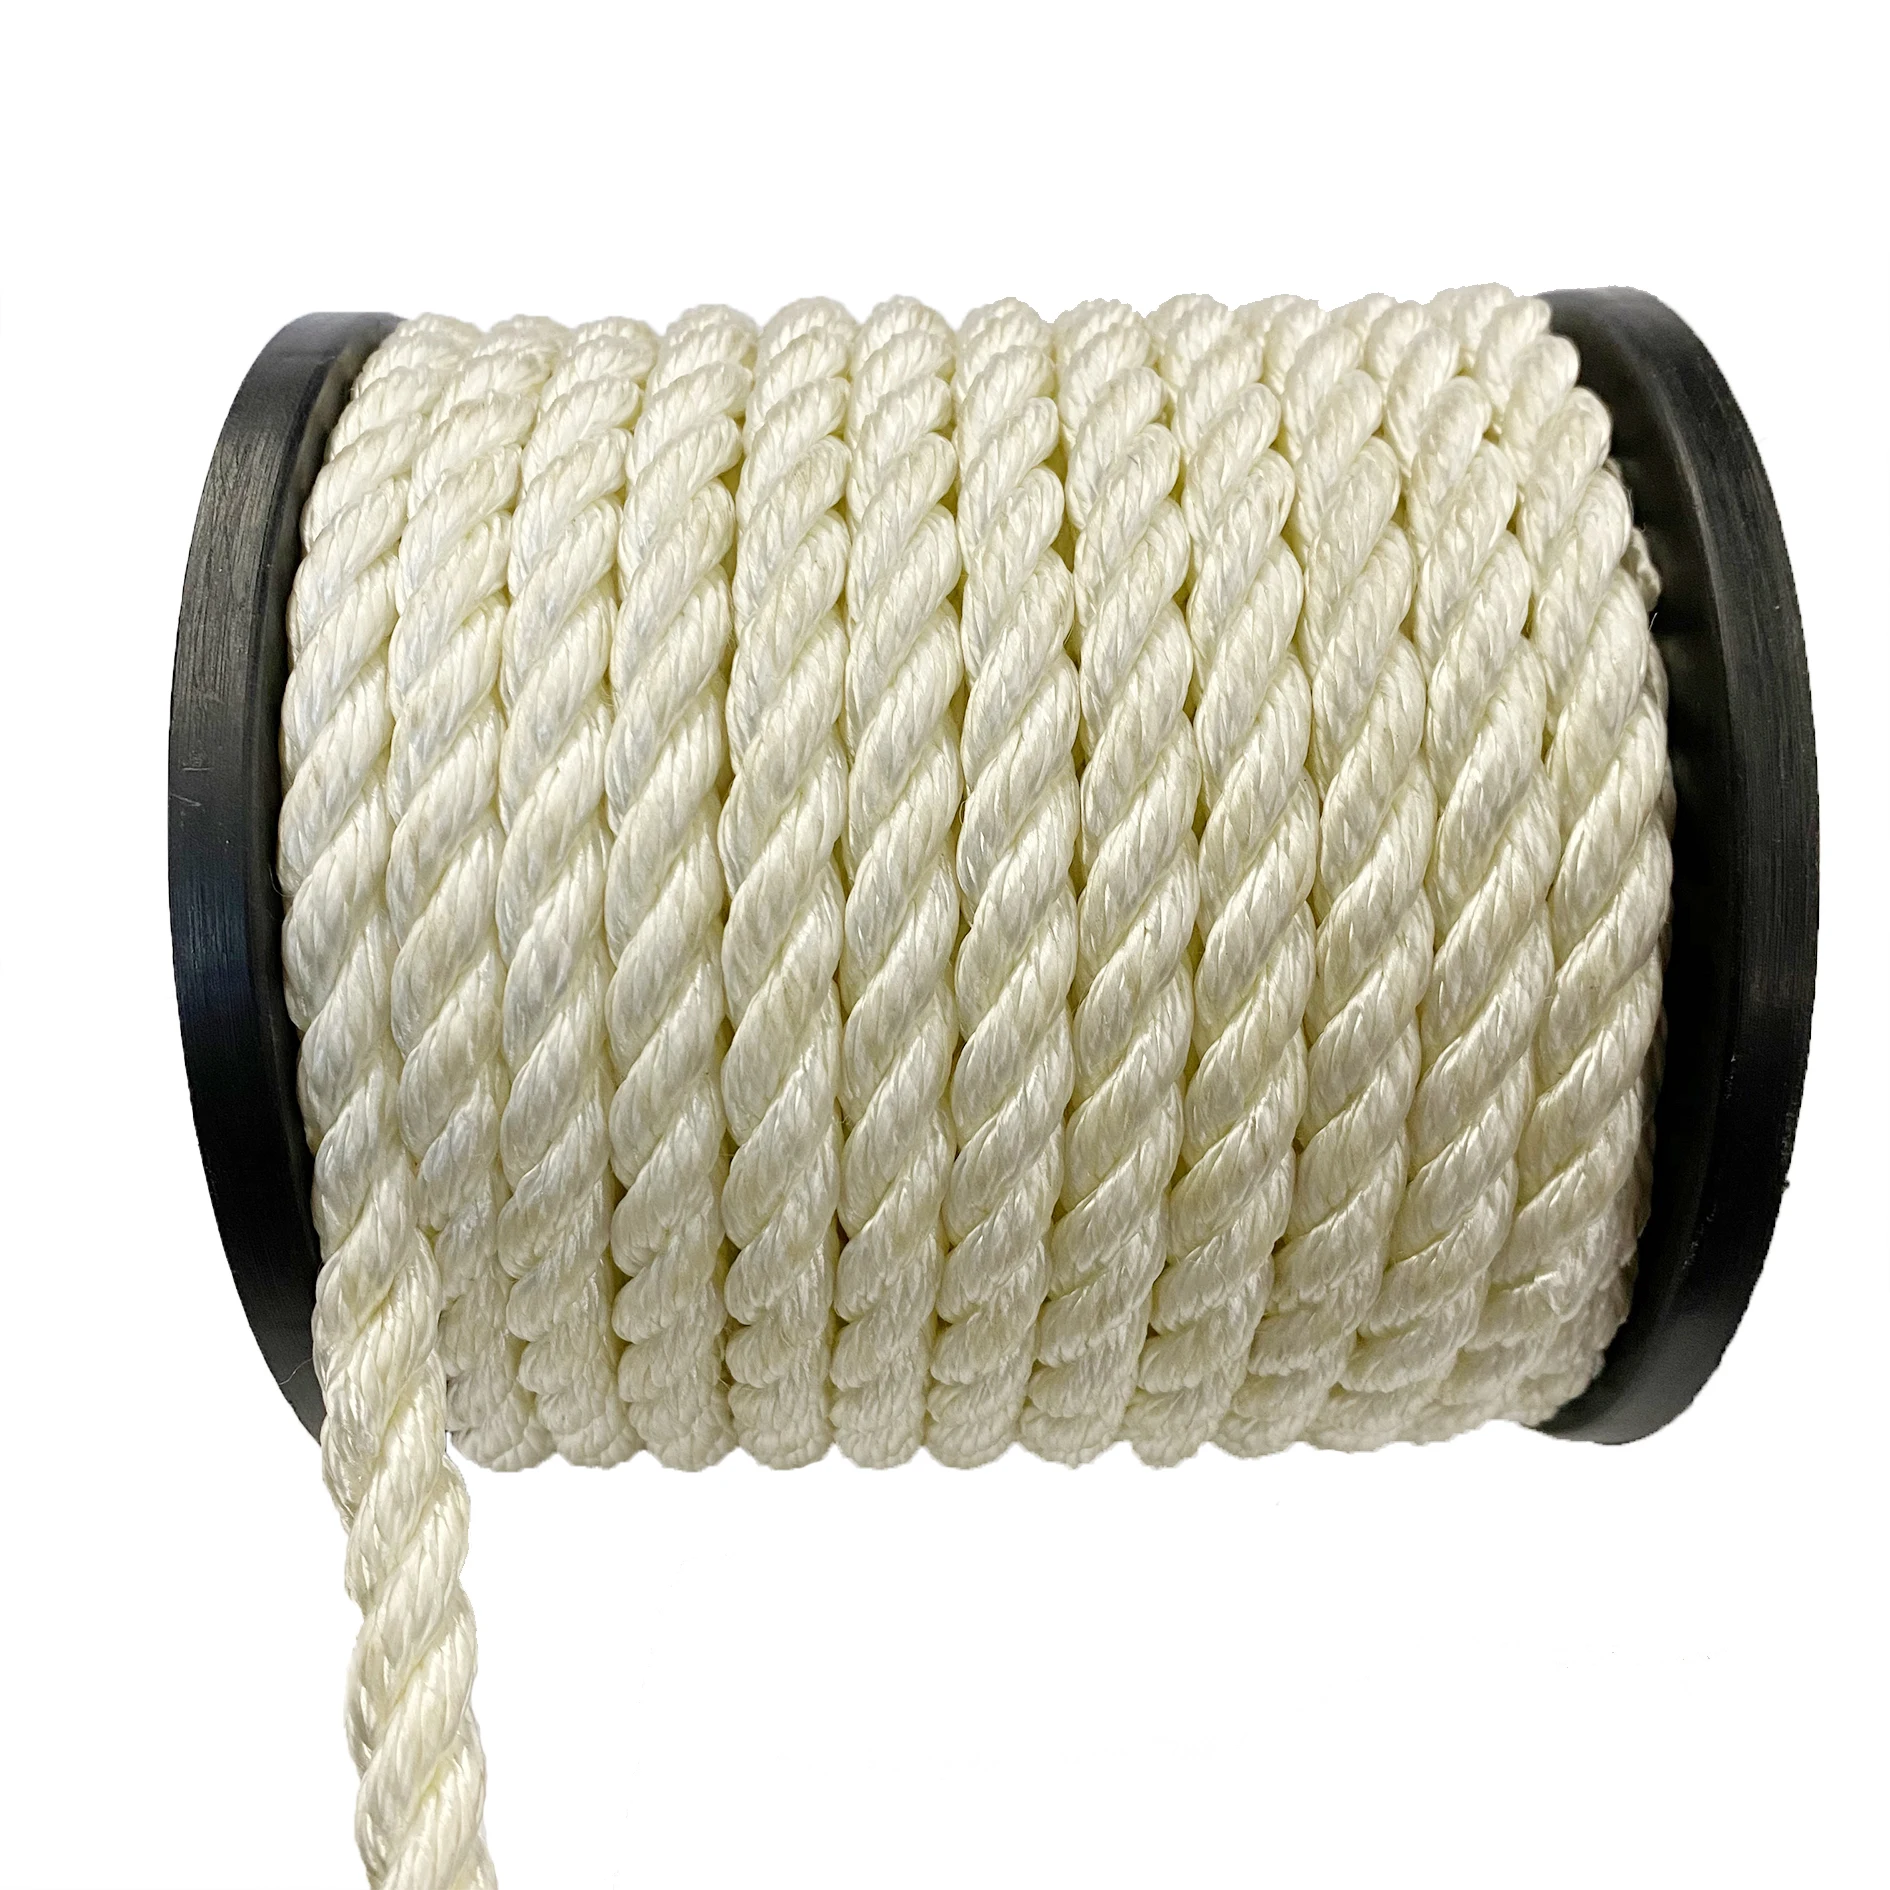 Twist hawser laid polyester rope as